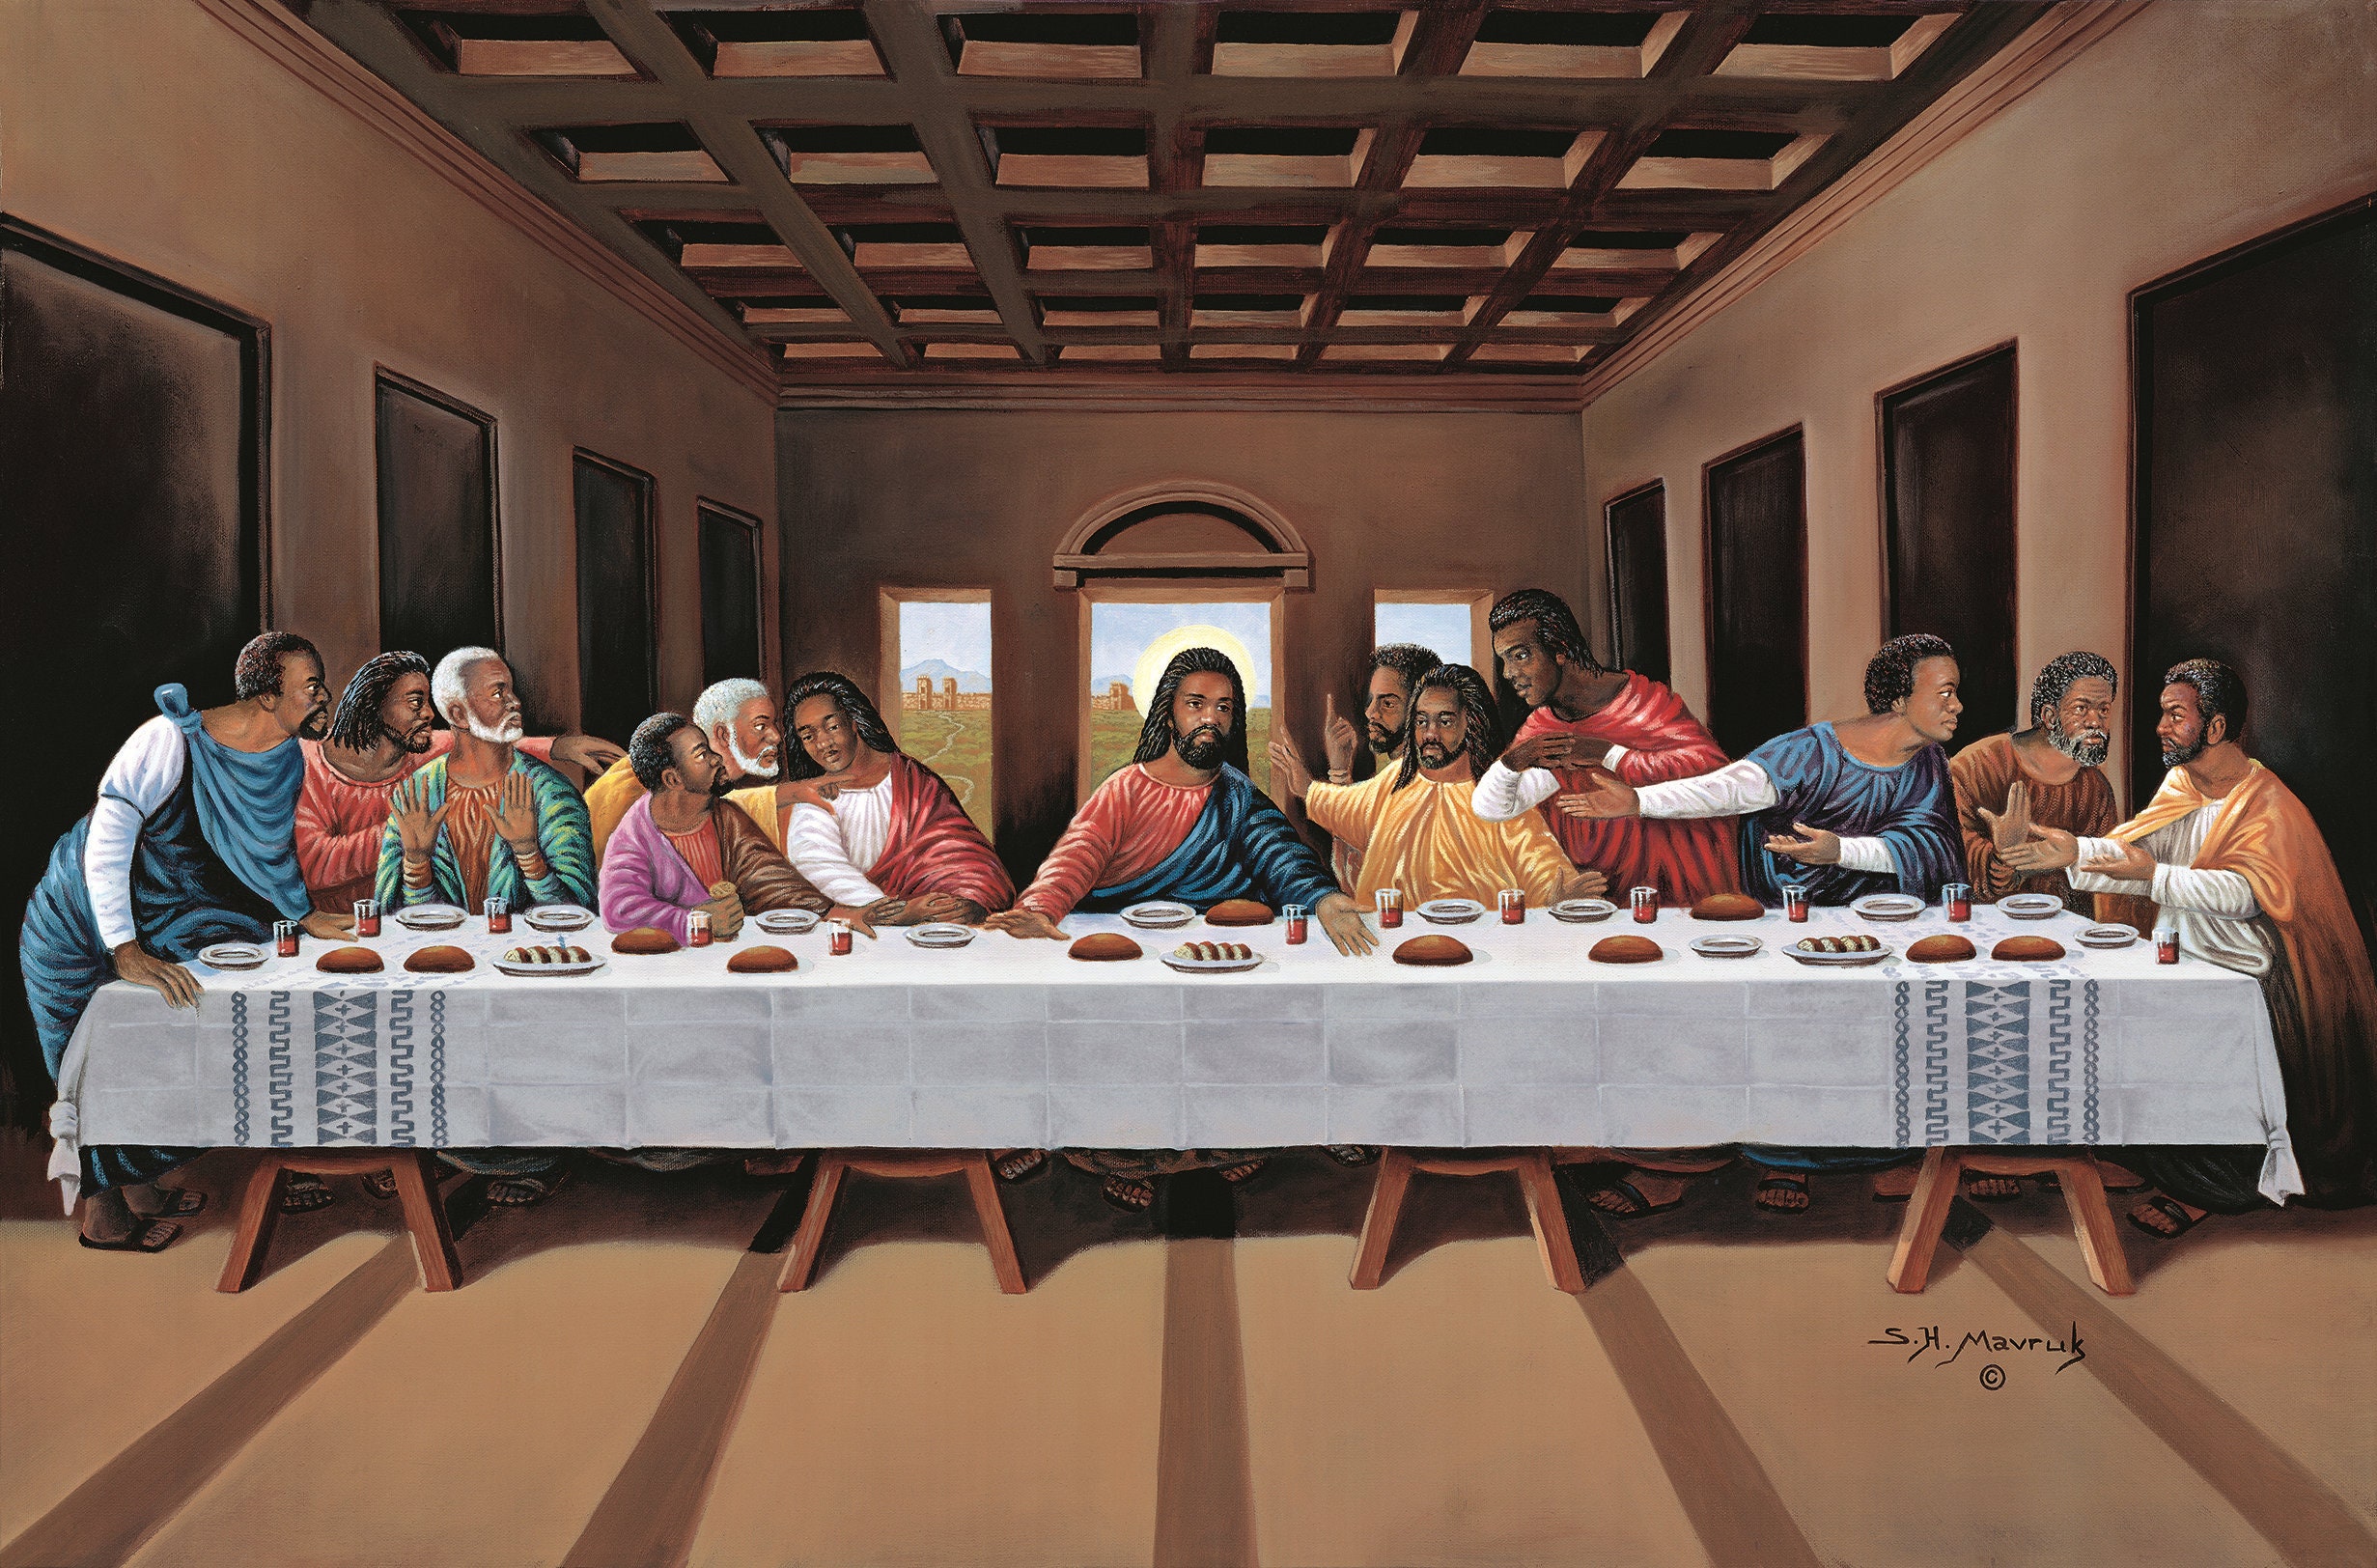 The Last Meal Jesus